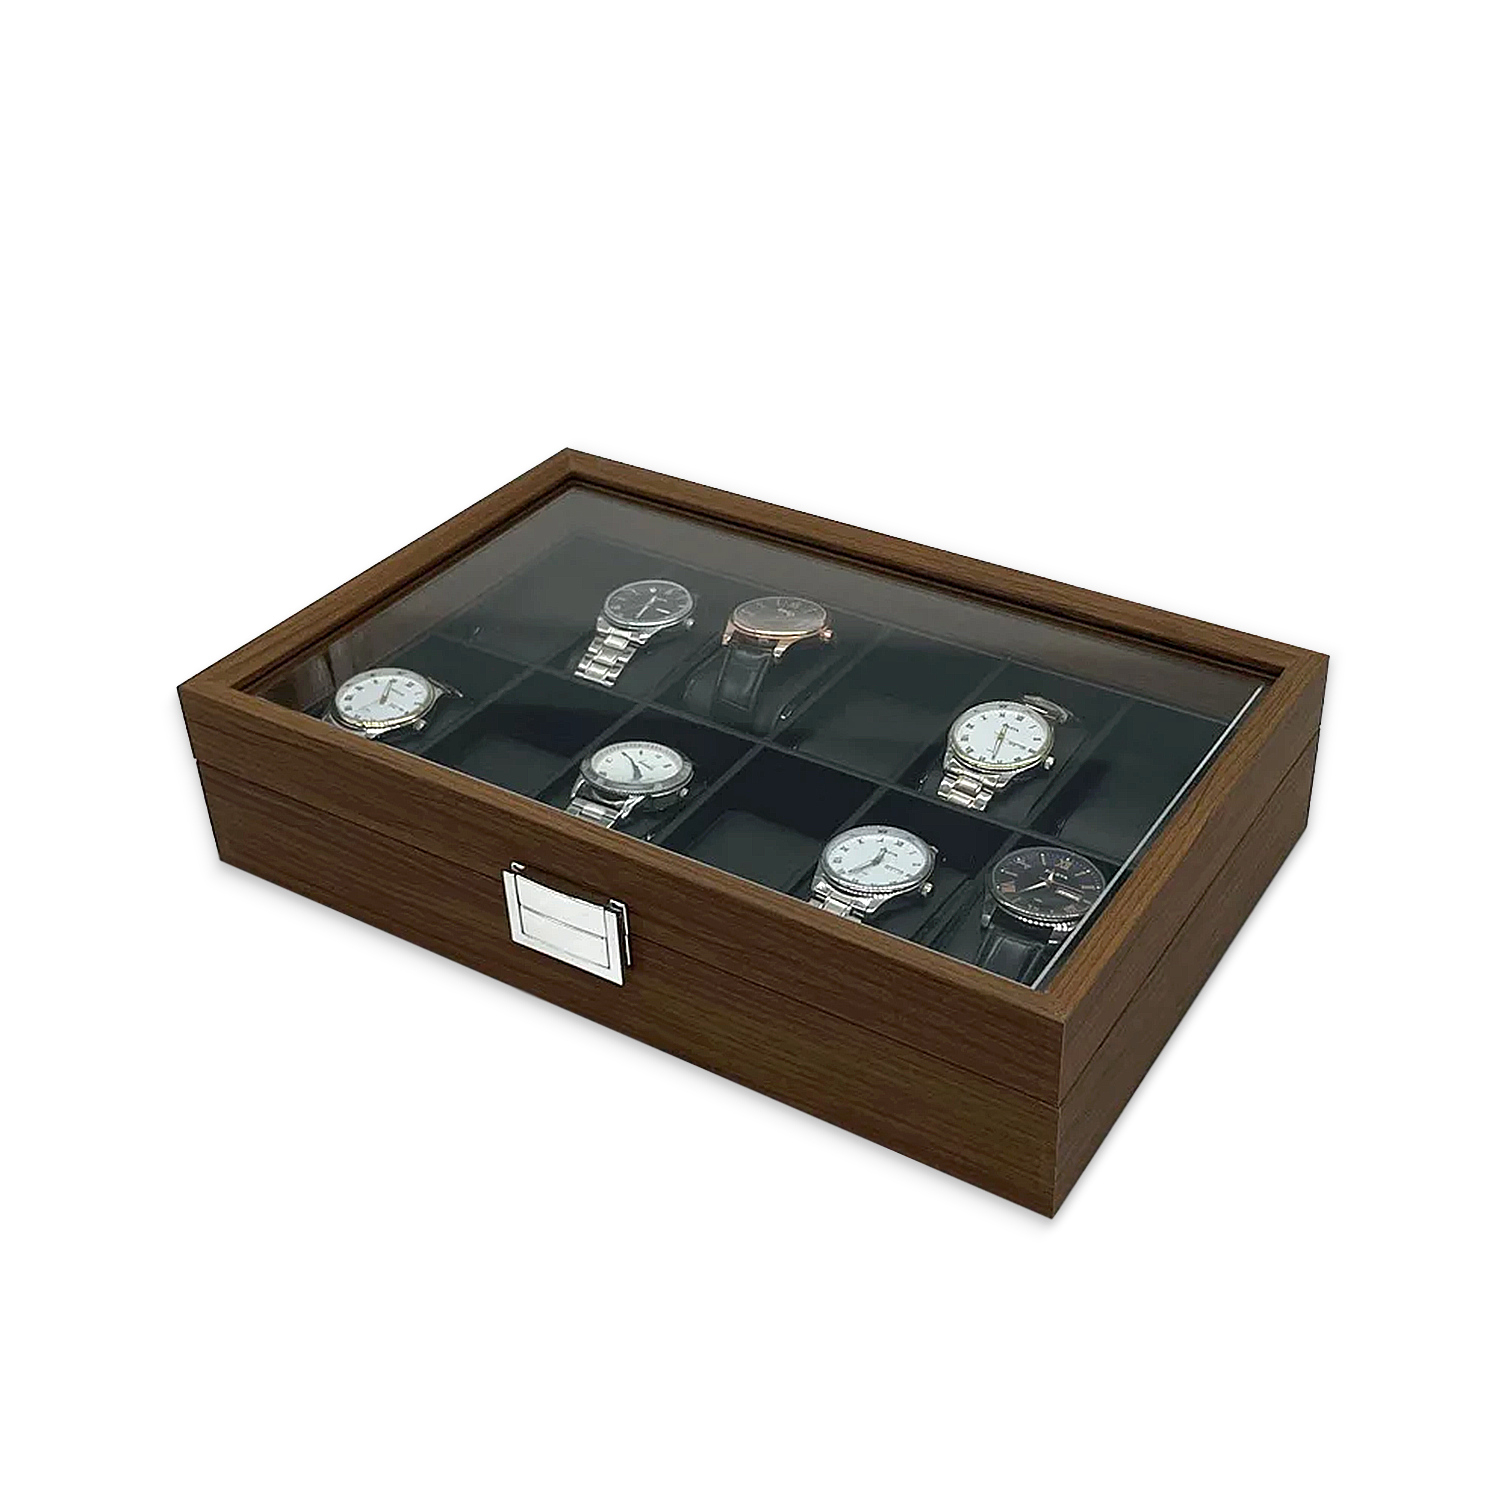 Caja estuche organizador para 12 relojes en madera